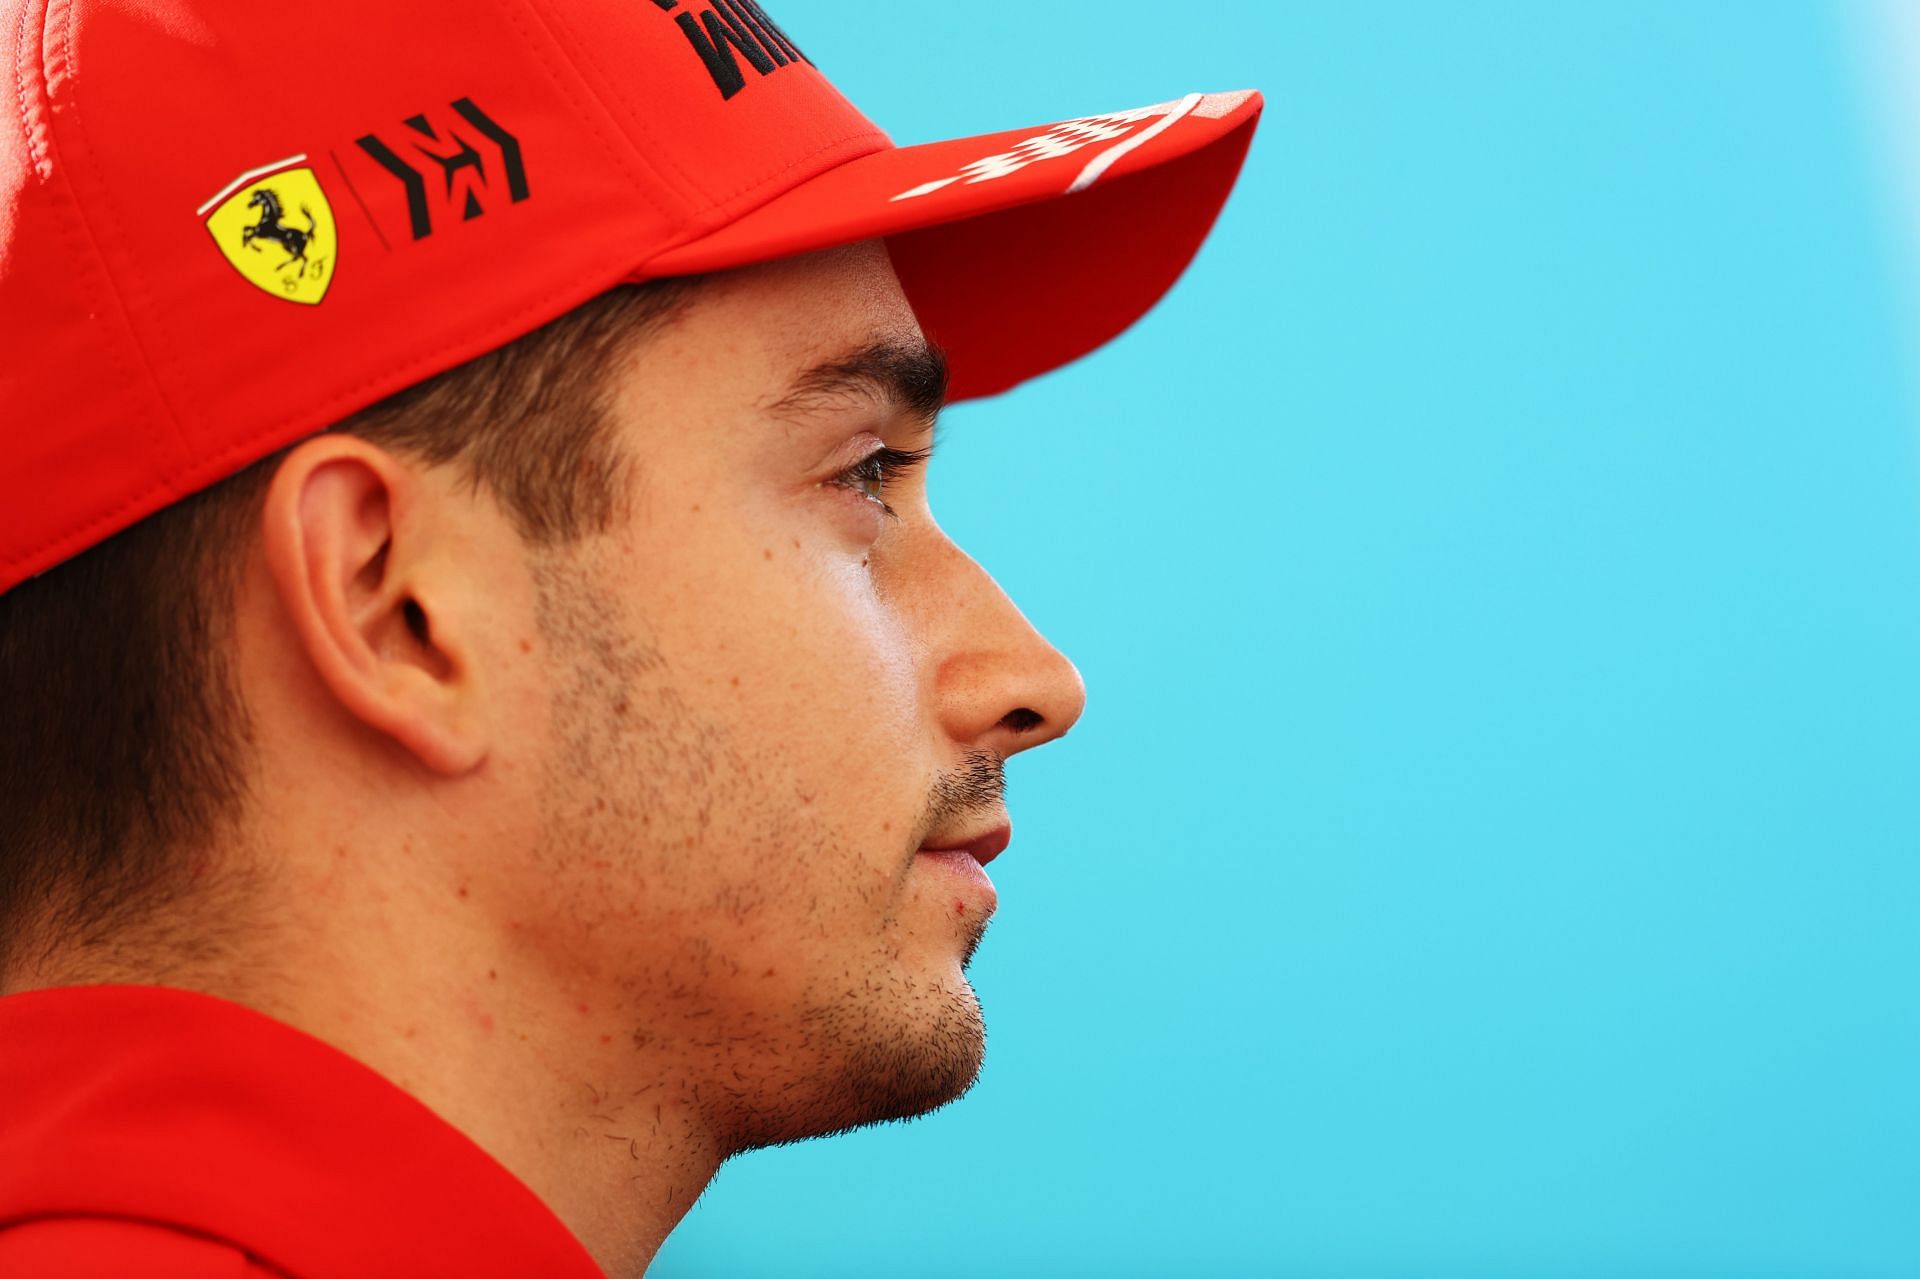 F1 Grand Prix of Abu Dhabi - Charles Leclerc had a mediocre season